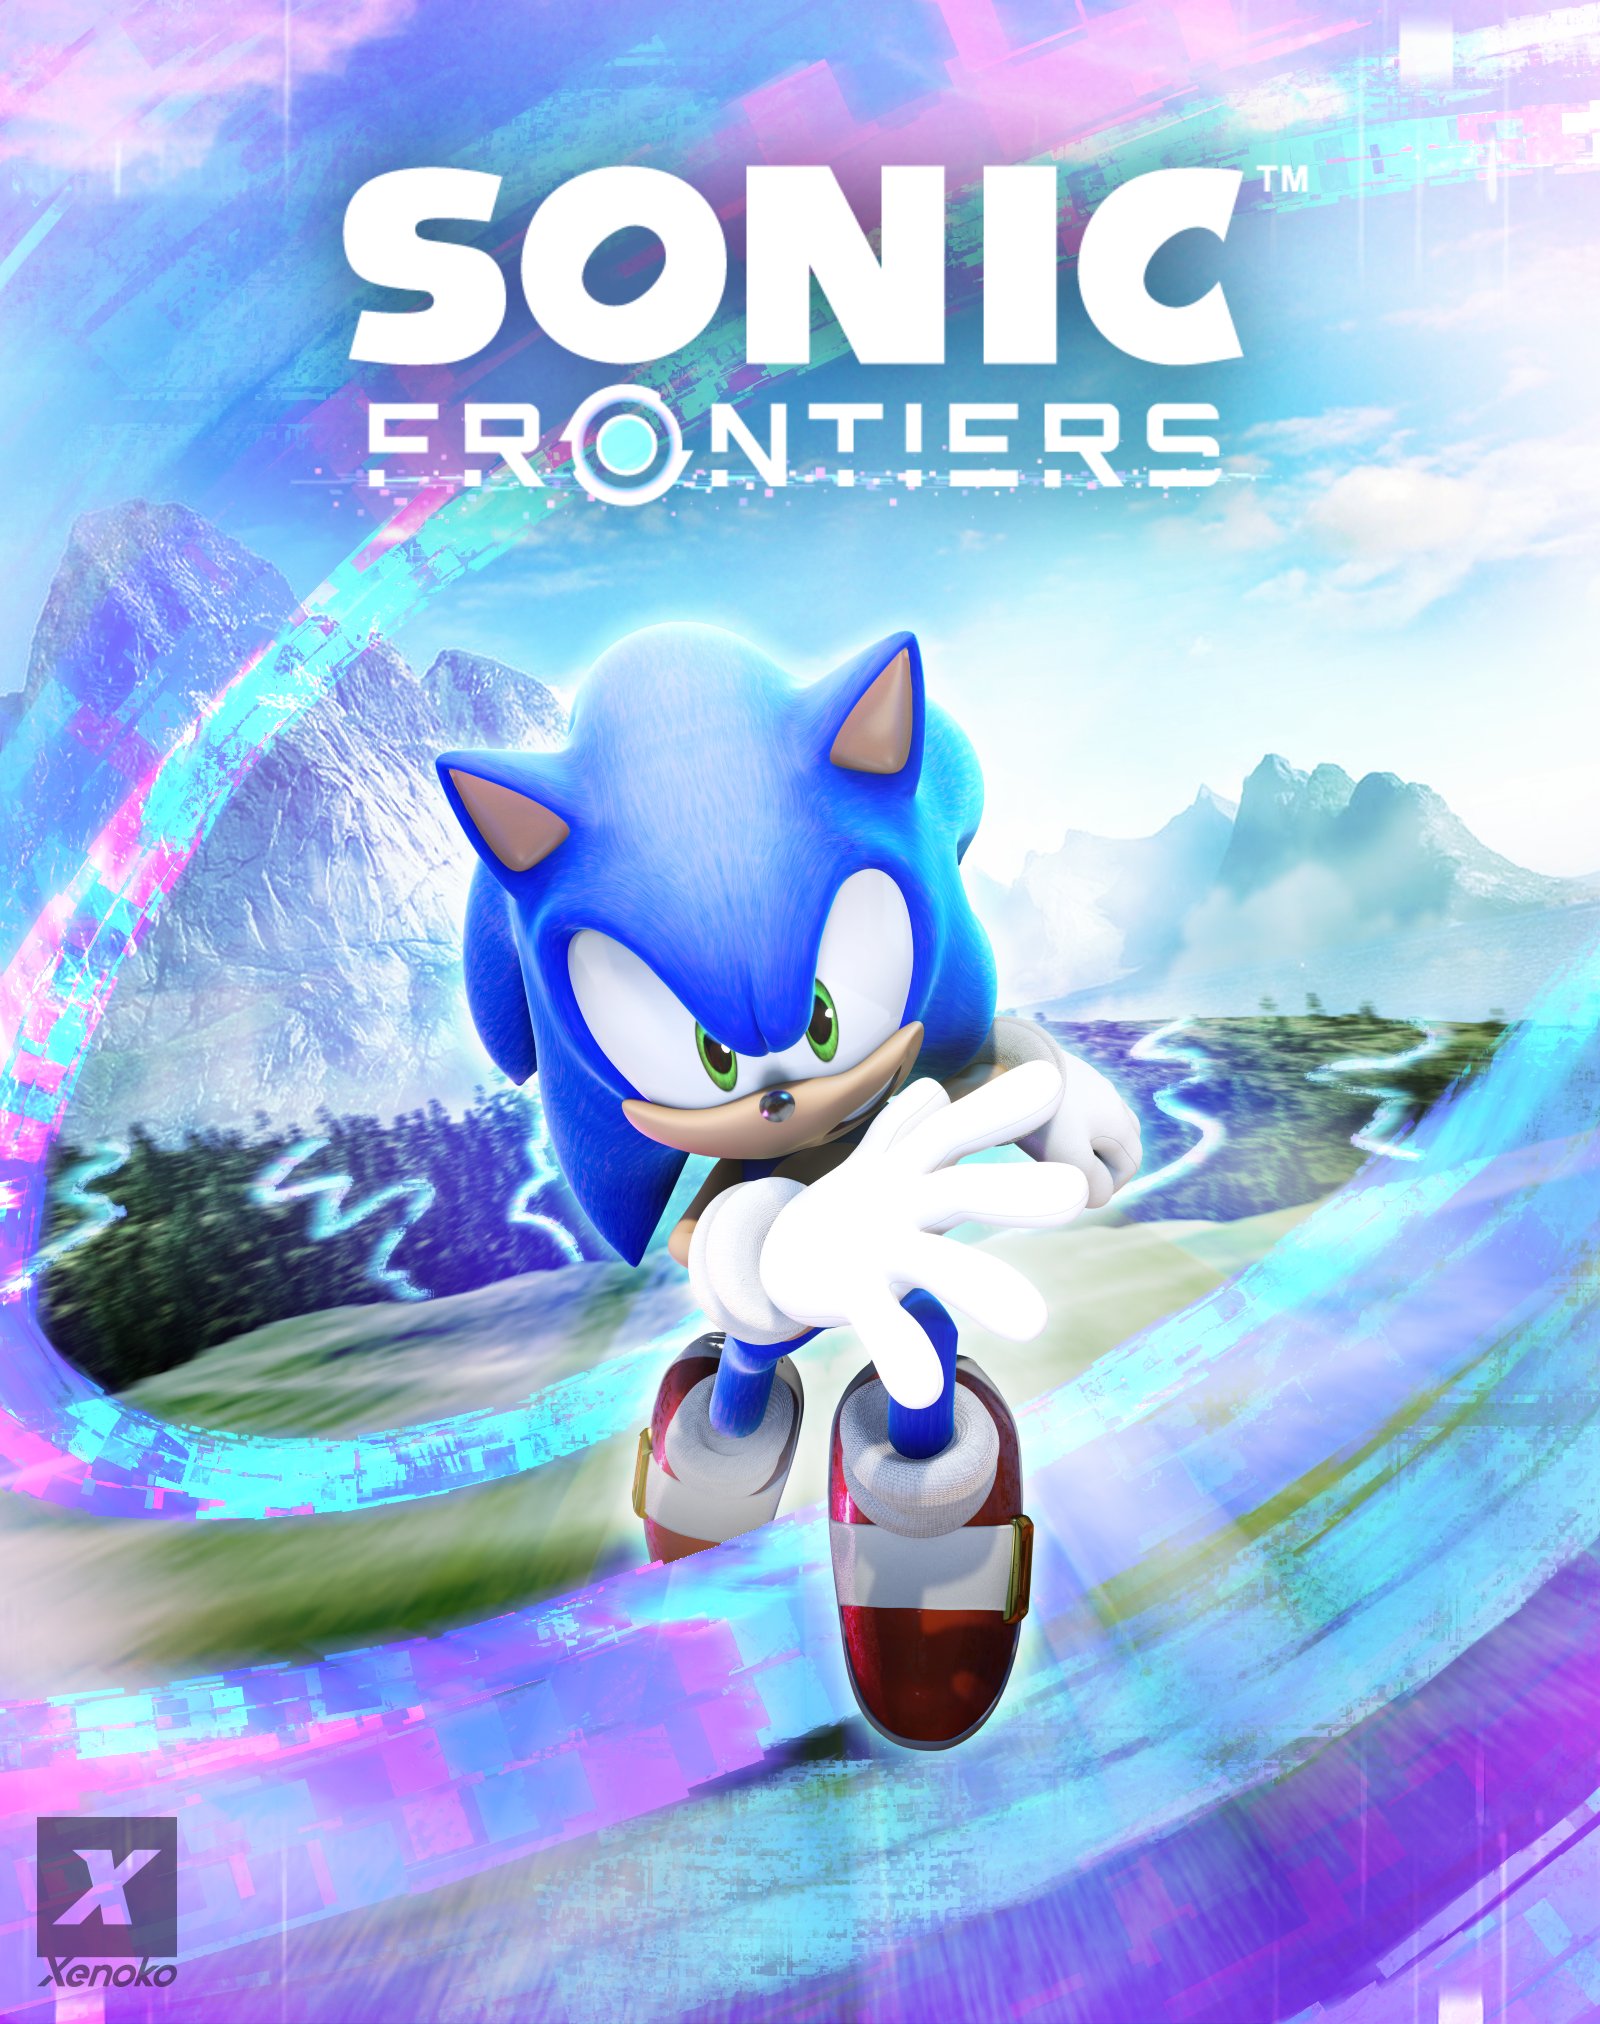 Xenoko on X: Felt like reposting my Sonic Frontiers UI mockups